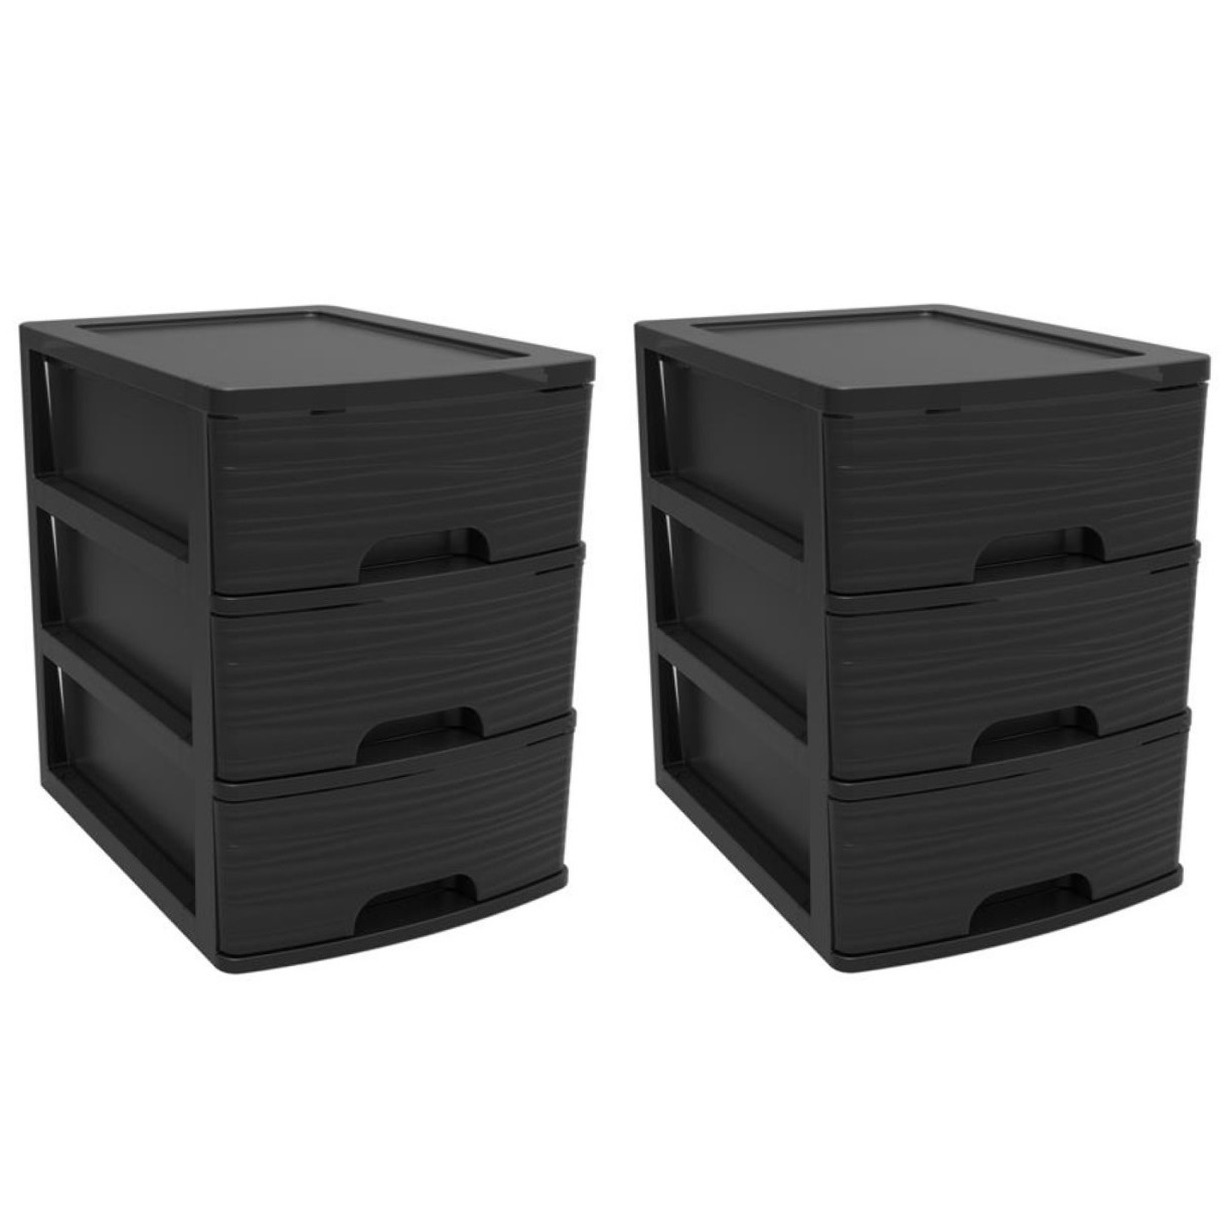 3x stuks ladenkast-bureau organizers zwart A5 3x lades stapelbaar L27 x B36 x H35 cm